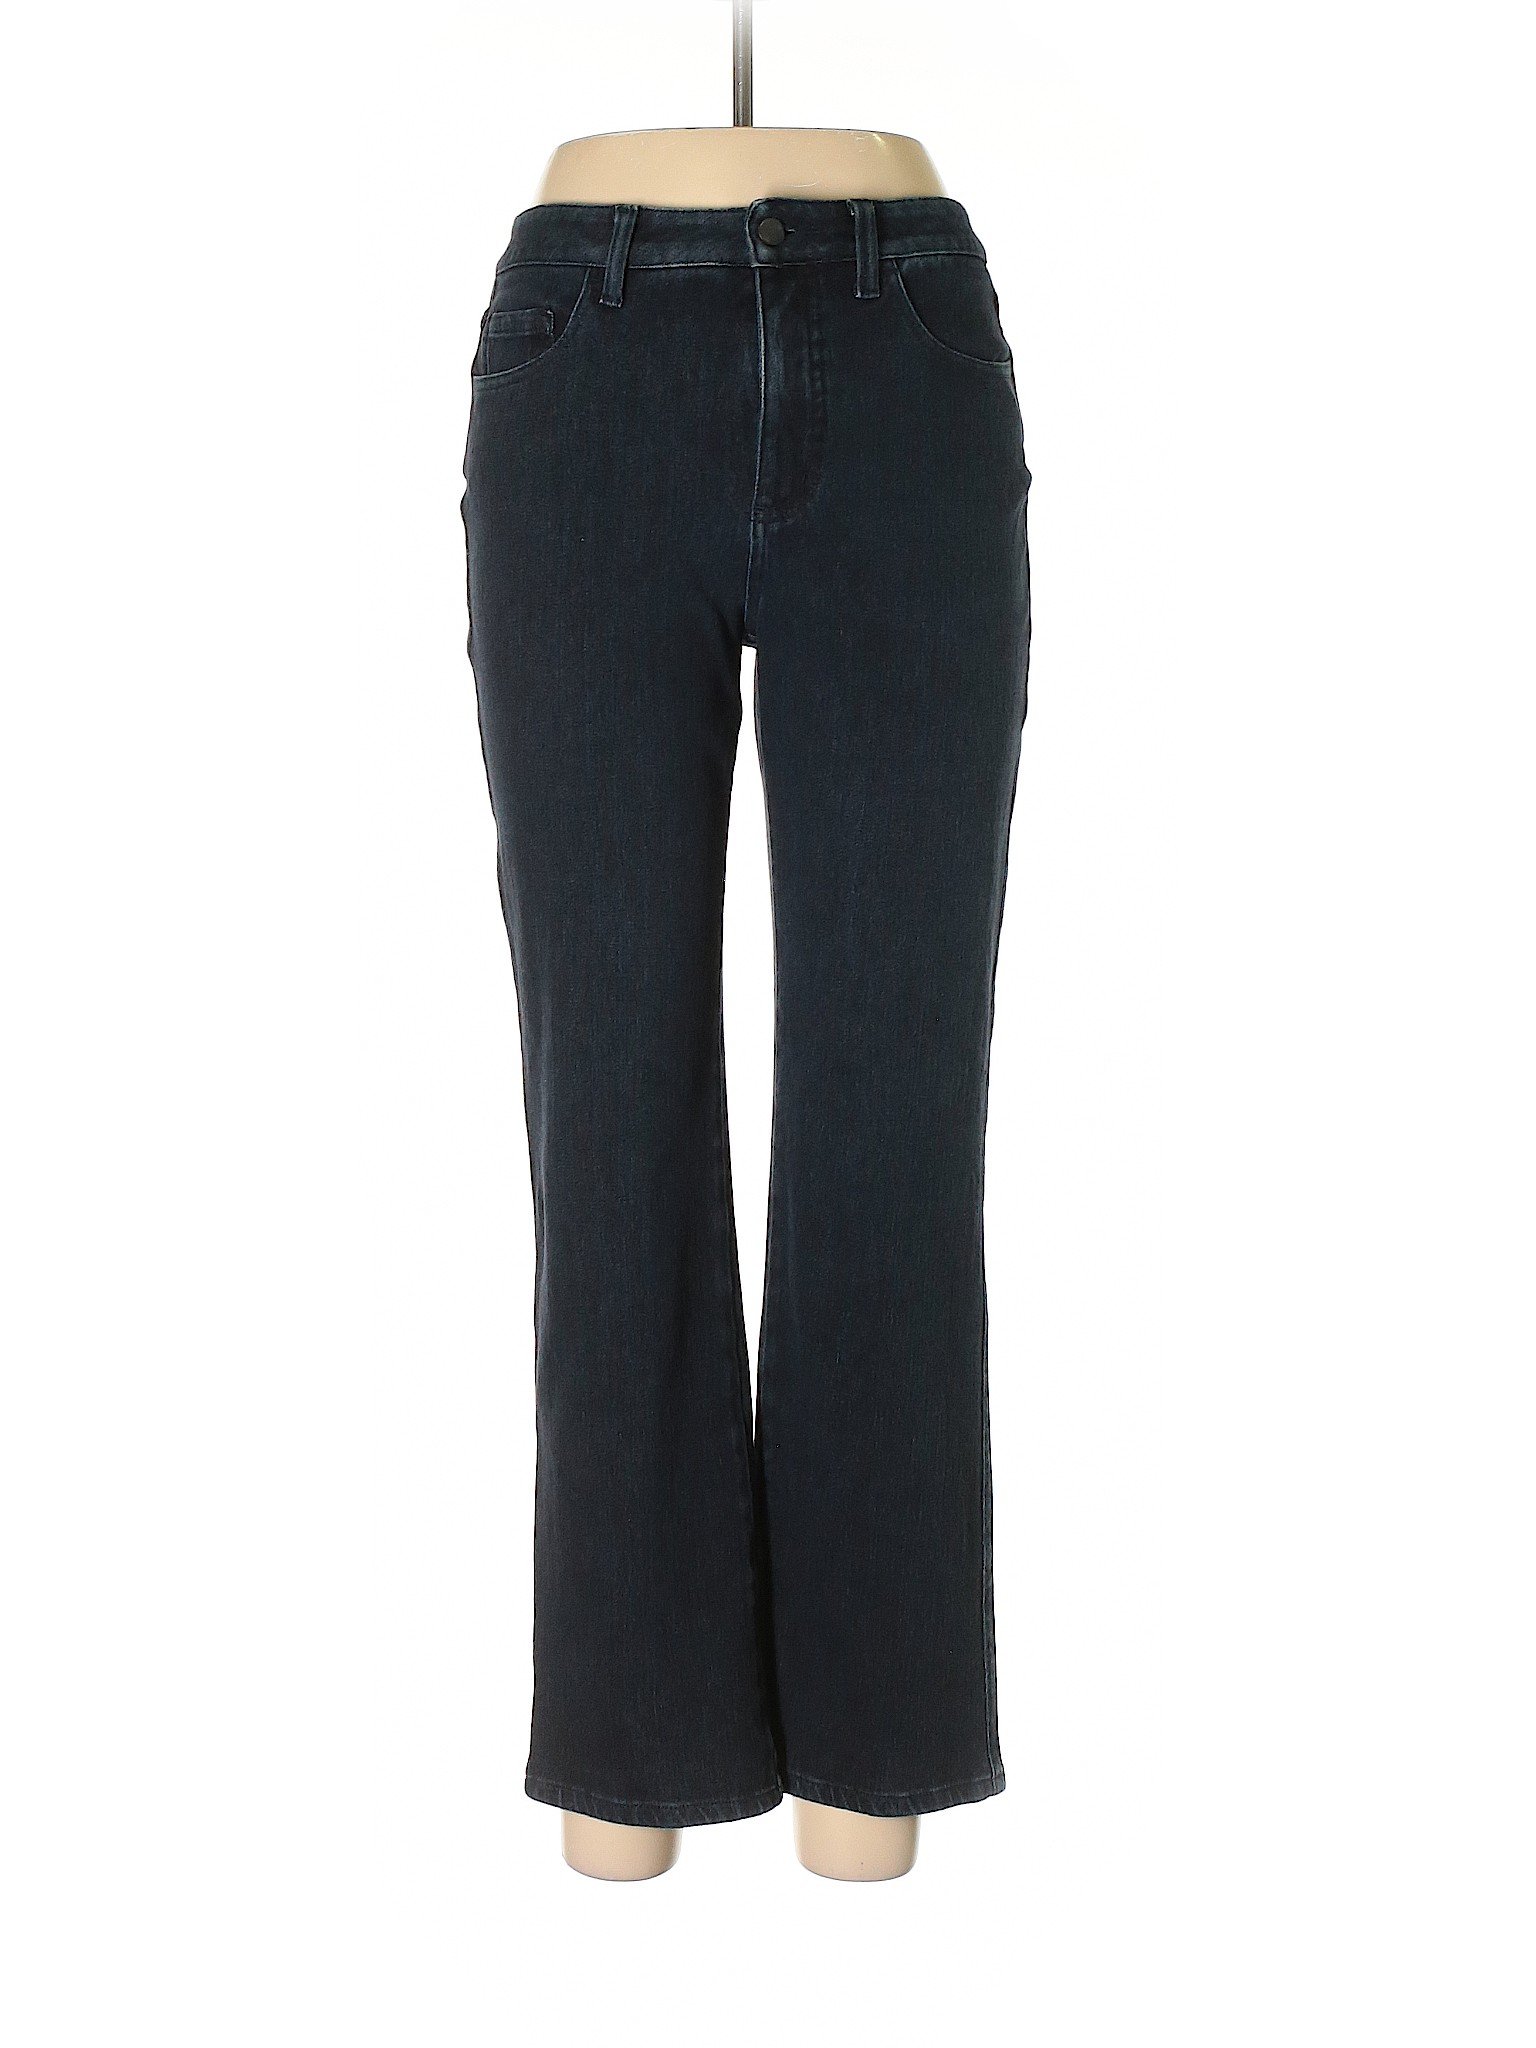 Coldwater Creek Women Black Jeans 8 Petites | eBay